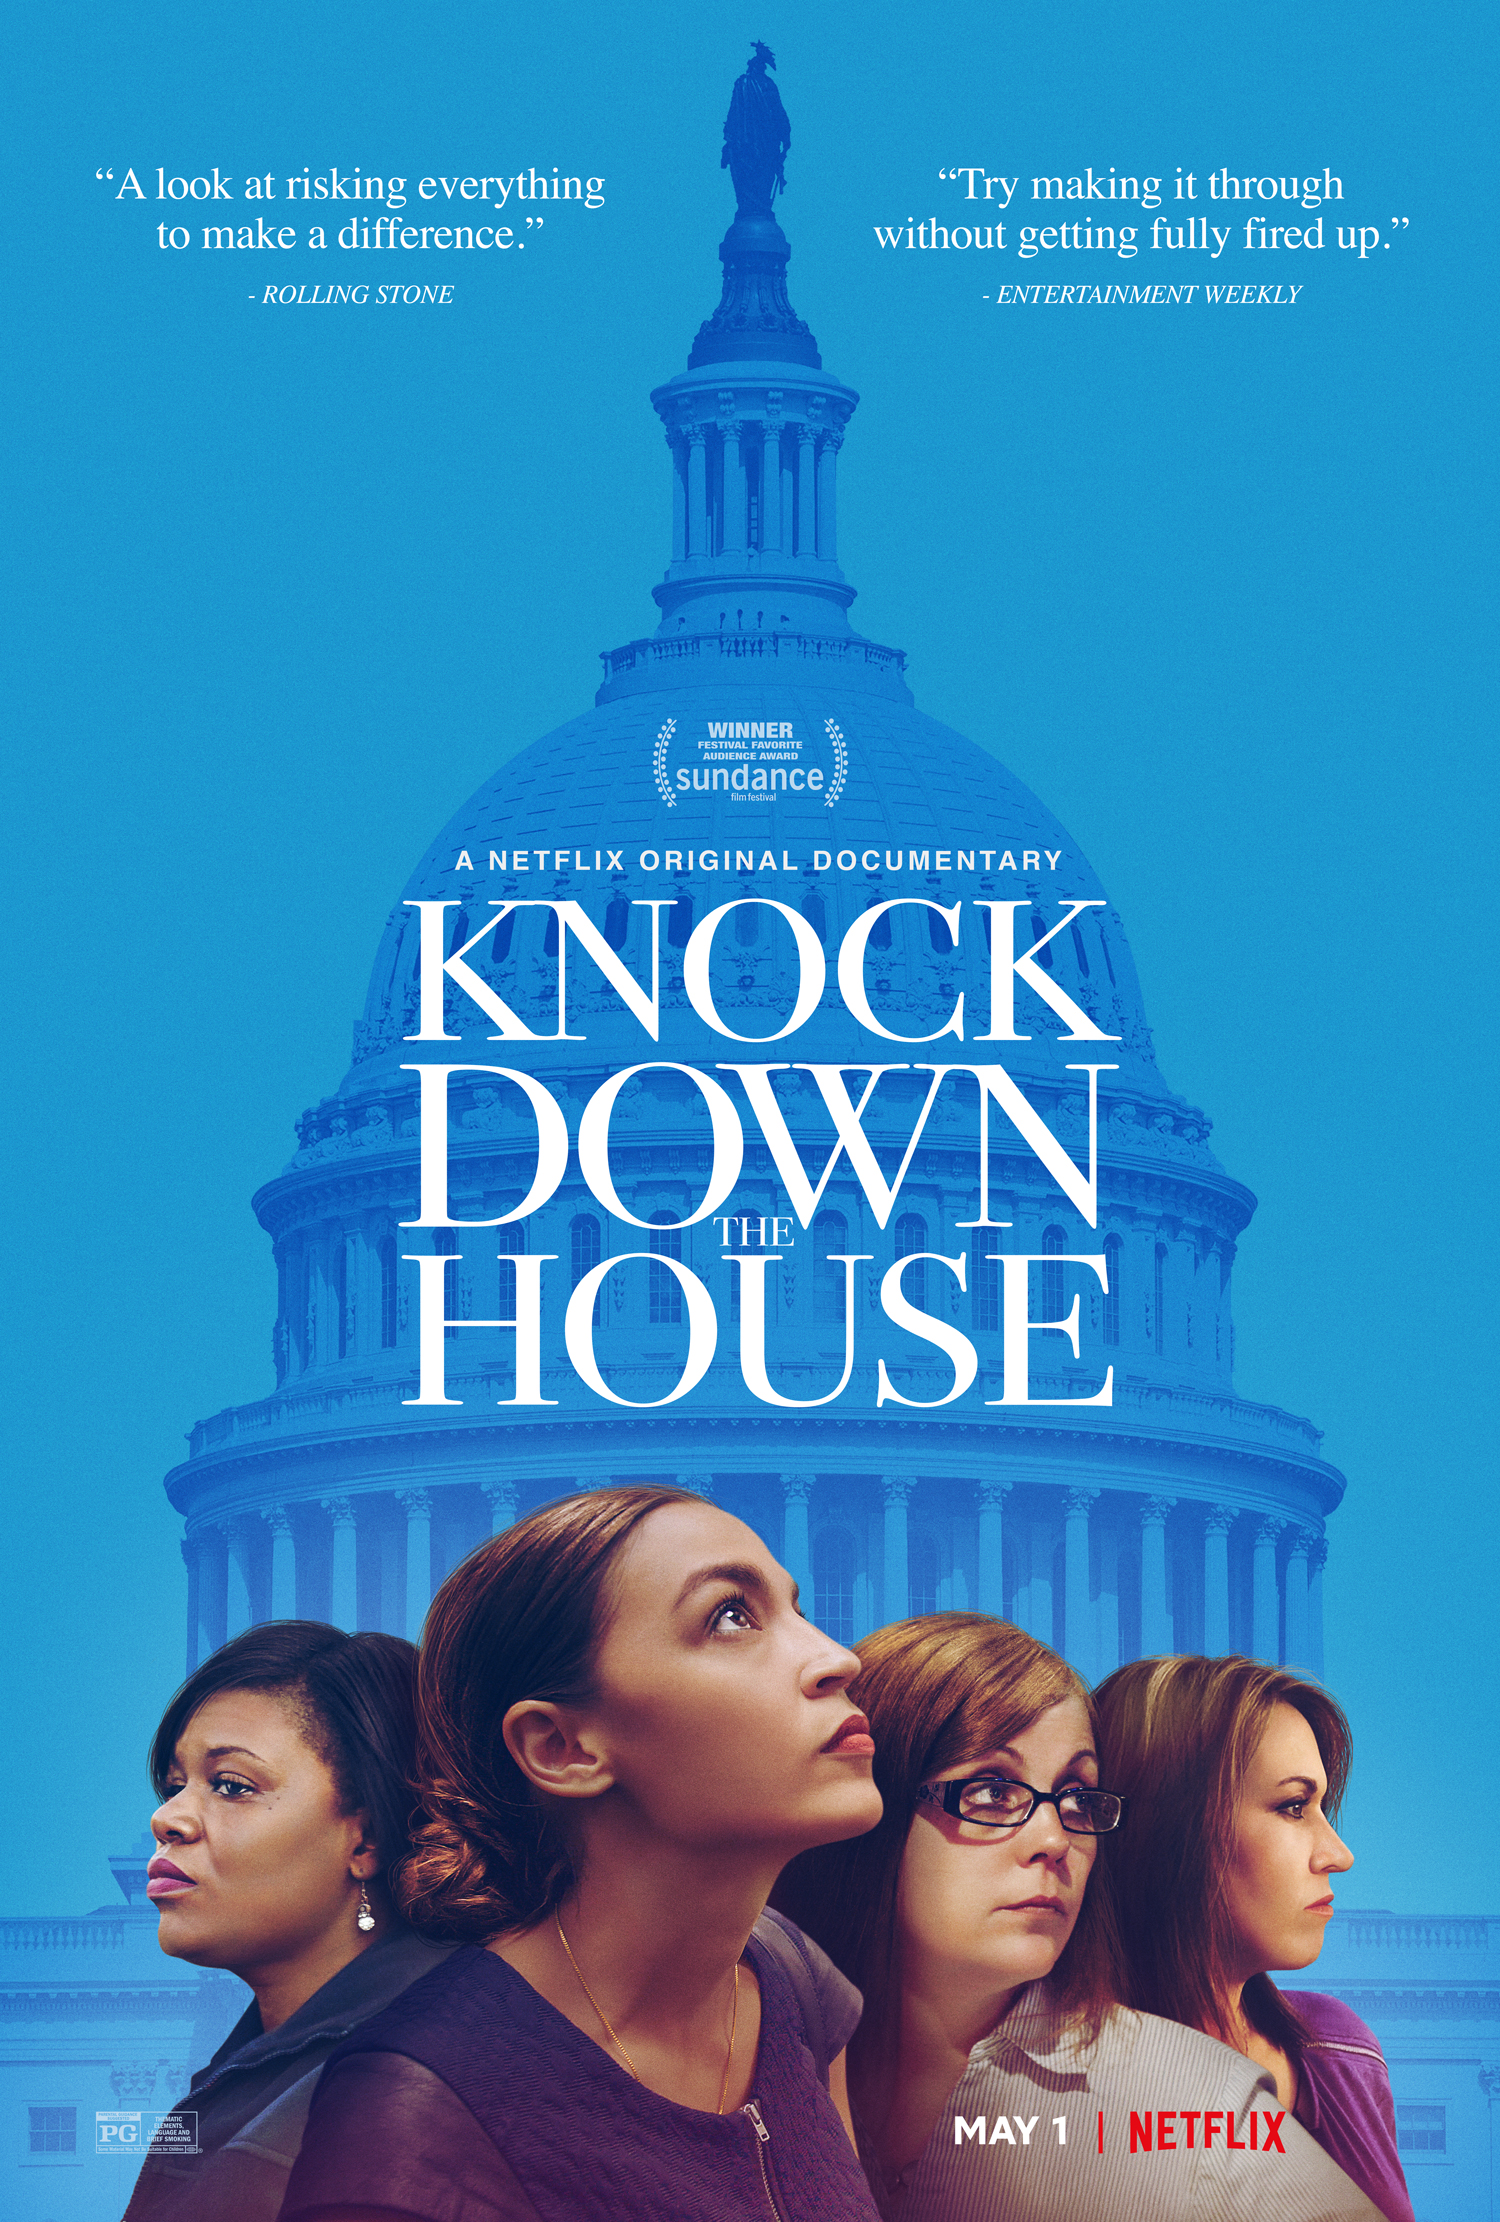 Nonton film Knock Down the House layarkaca21 indoxx1 ganool online streaming terbaru